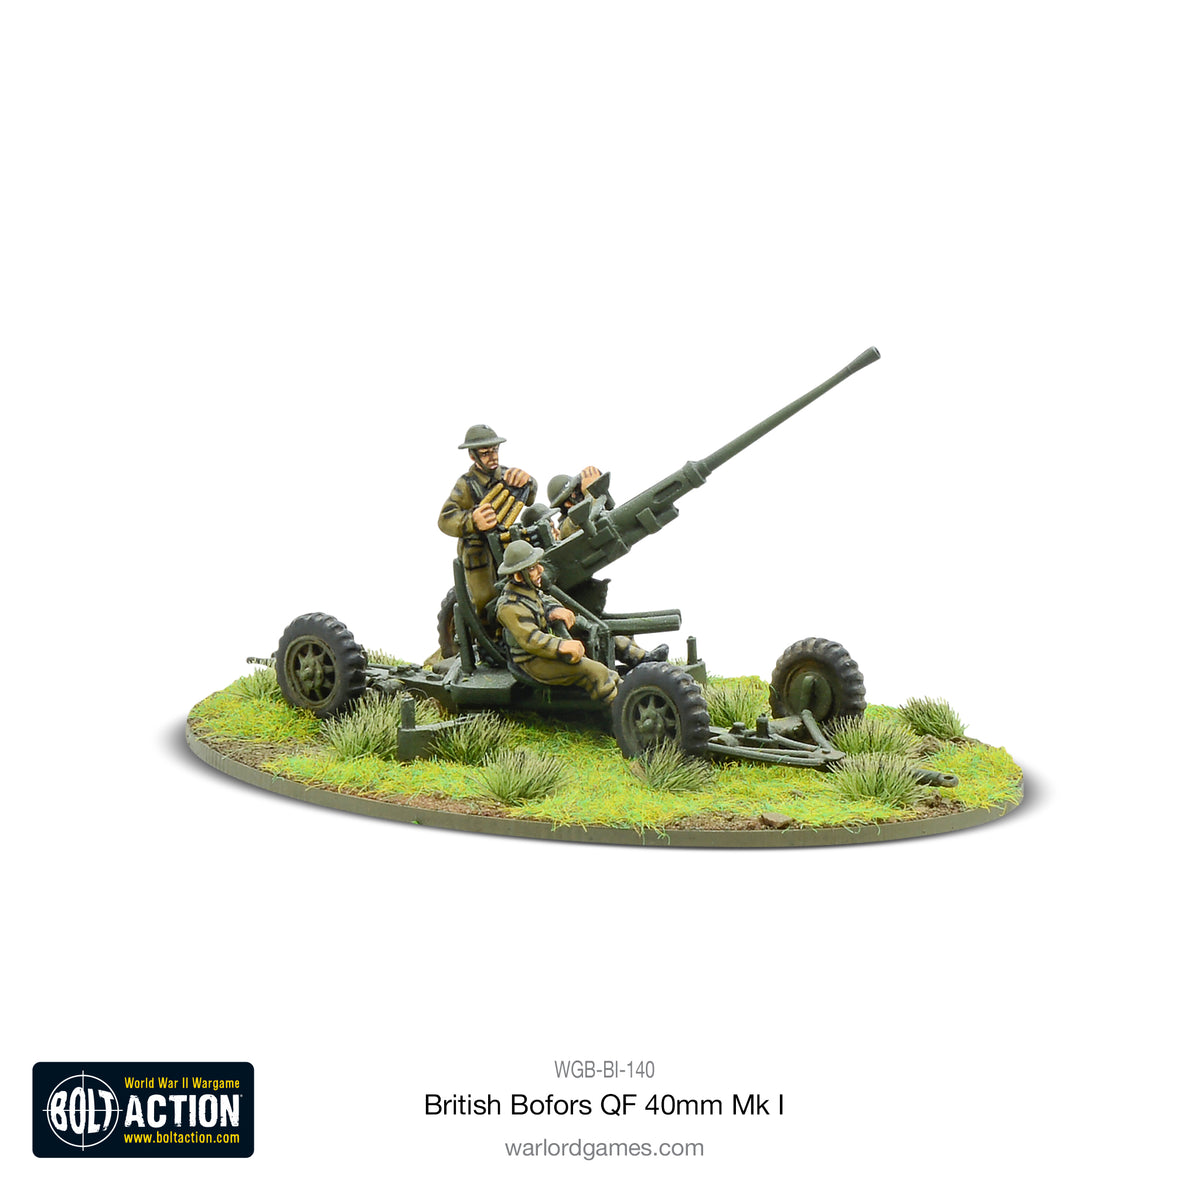 British Bofors QF 40mm Mk I